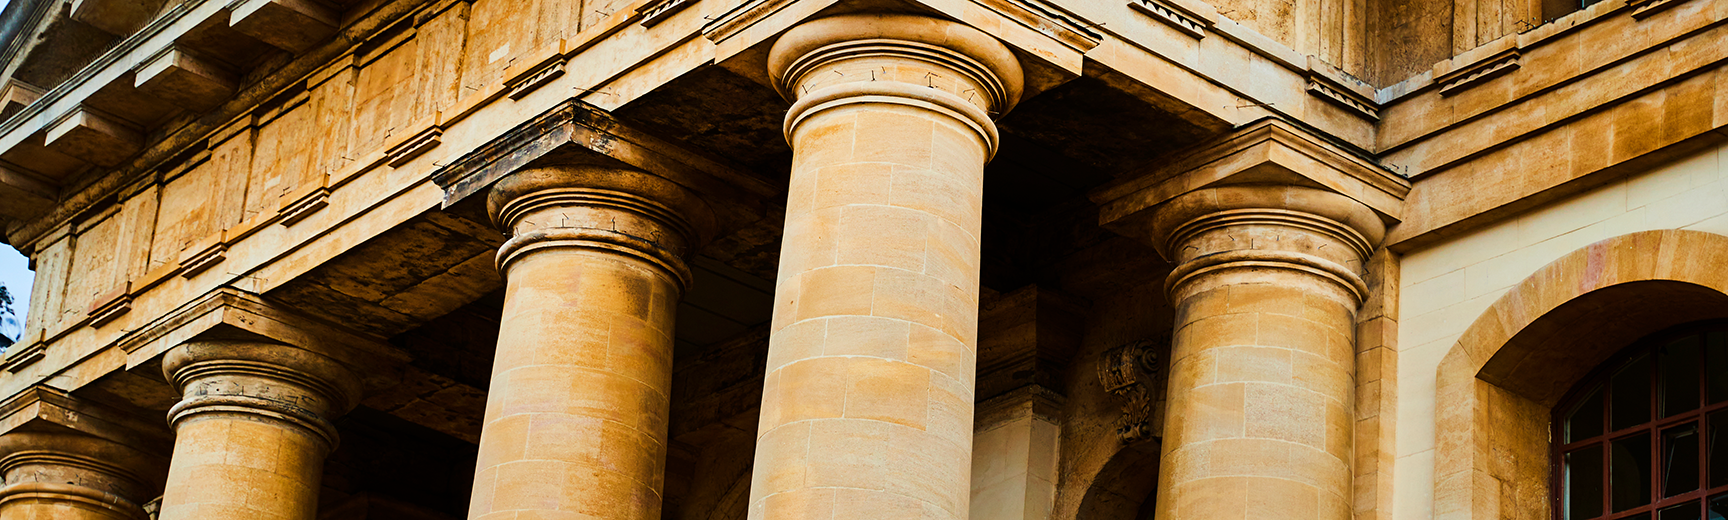 Oxford building pillars